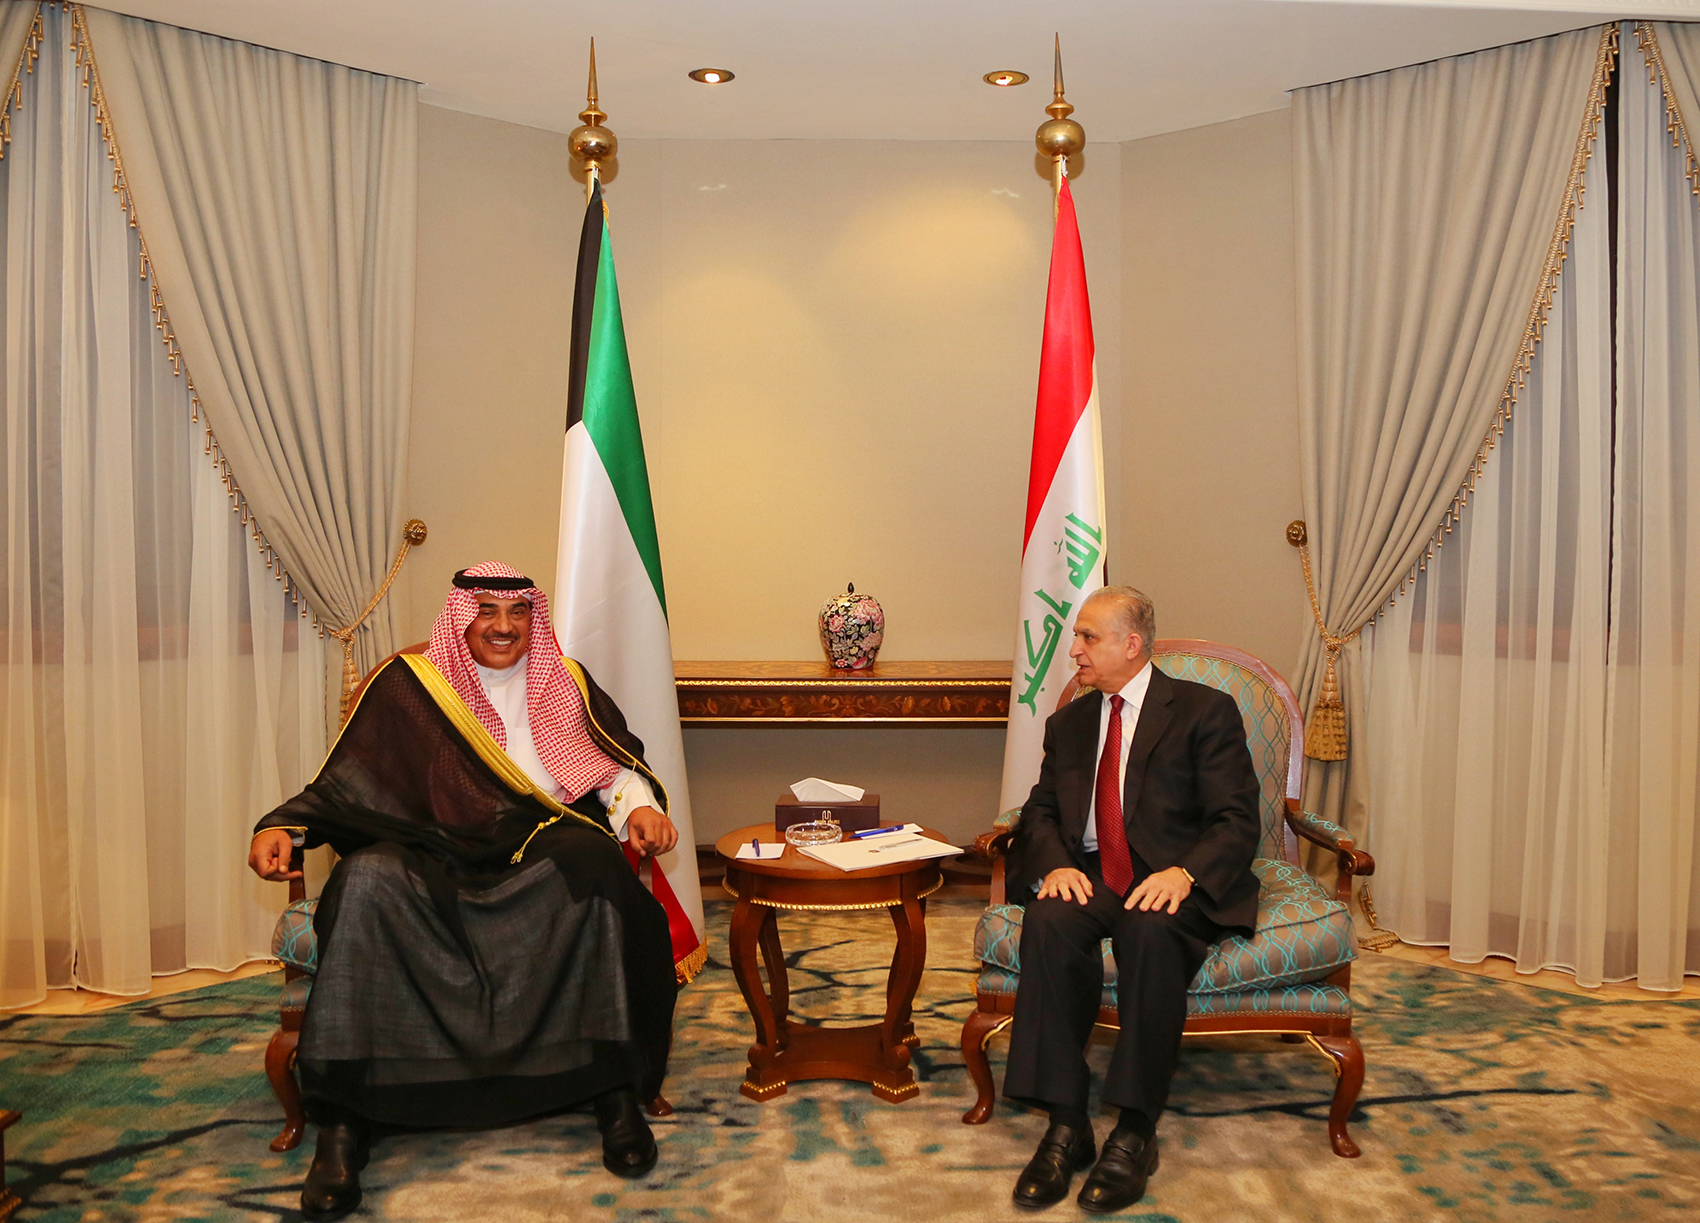 Kuwaiti Deputy Prime Minister and Foreign Minister Sheikh Sabah Al-Khaled Al-Hamad Al-Sabah with Foreign Minister Mohammad Al-Hakim